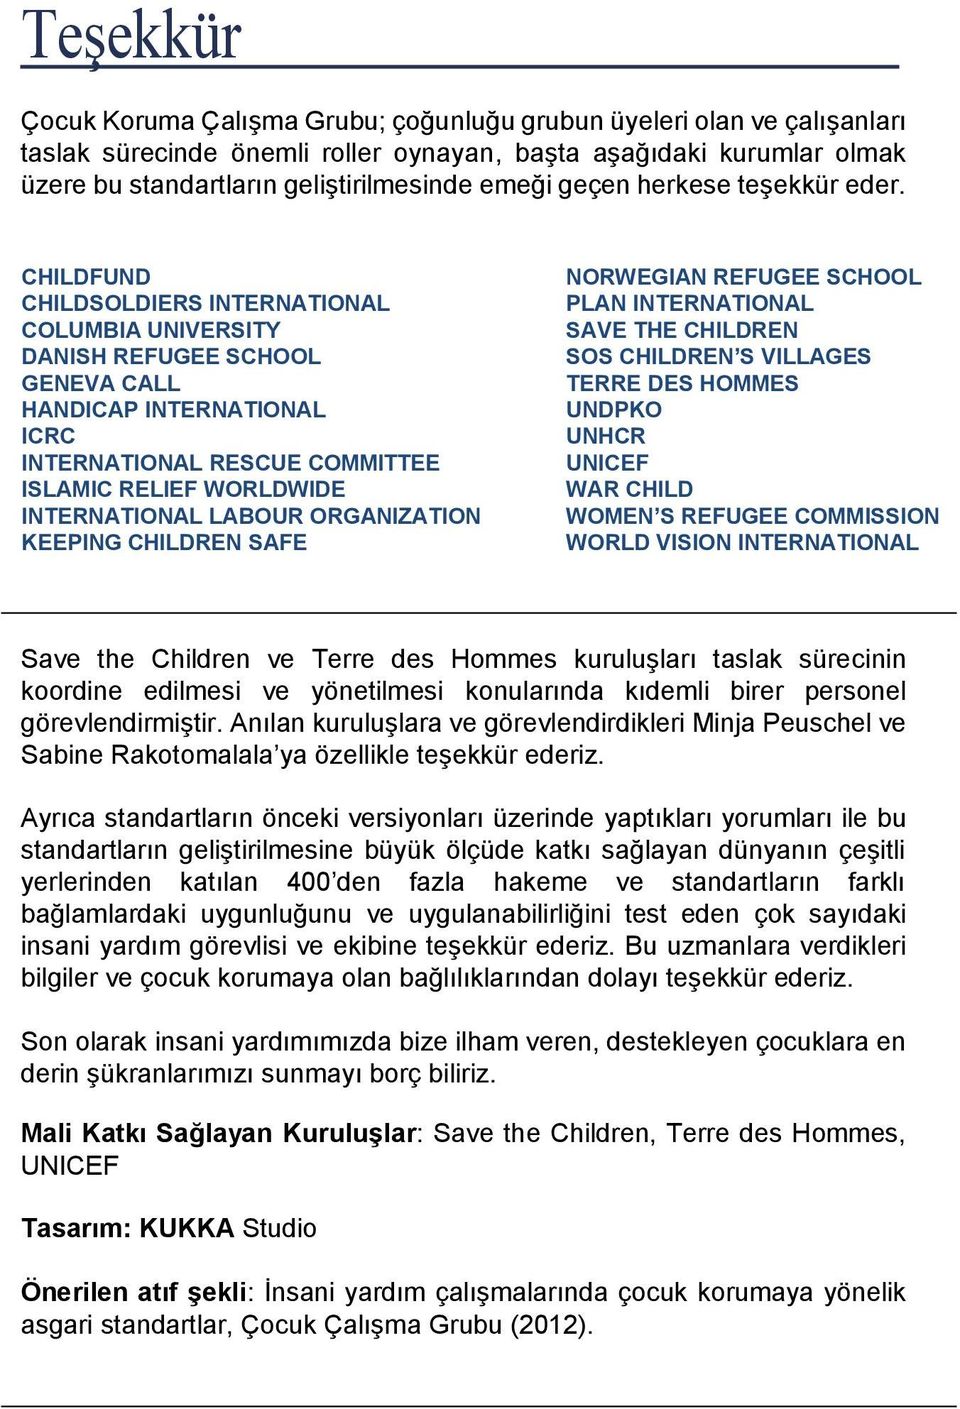 CHILDFUND CHILDSOLDIERS INTERNATIONAL COLUMBIA UNIVERSITY DANISH REFUGEE SCHOOL GENEVA CALL HANDICAP INTERNATIONAL ICRC INTERNATIONAL RESCUE COMMITTEE ISLAMIC RELIEF WORLDWIDE INTERNATIONAL LABOUR